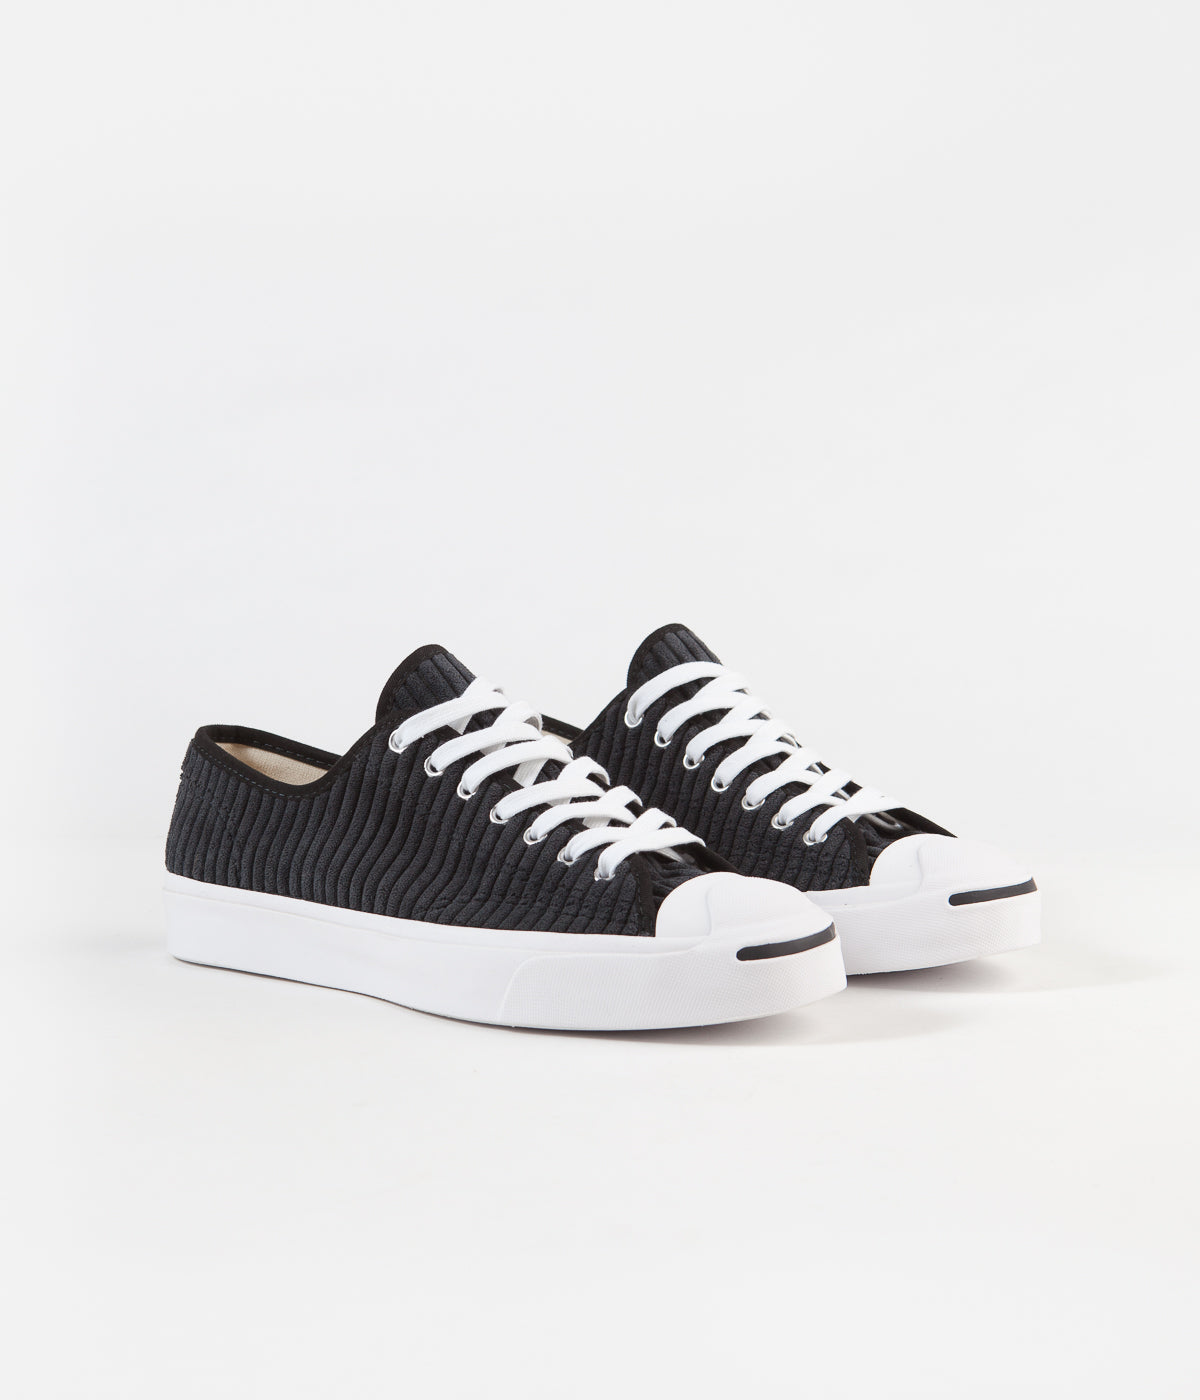 Converse JP Ox Wide Wale Cord Shoes - Black / White / Black | Flatspot